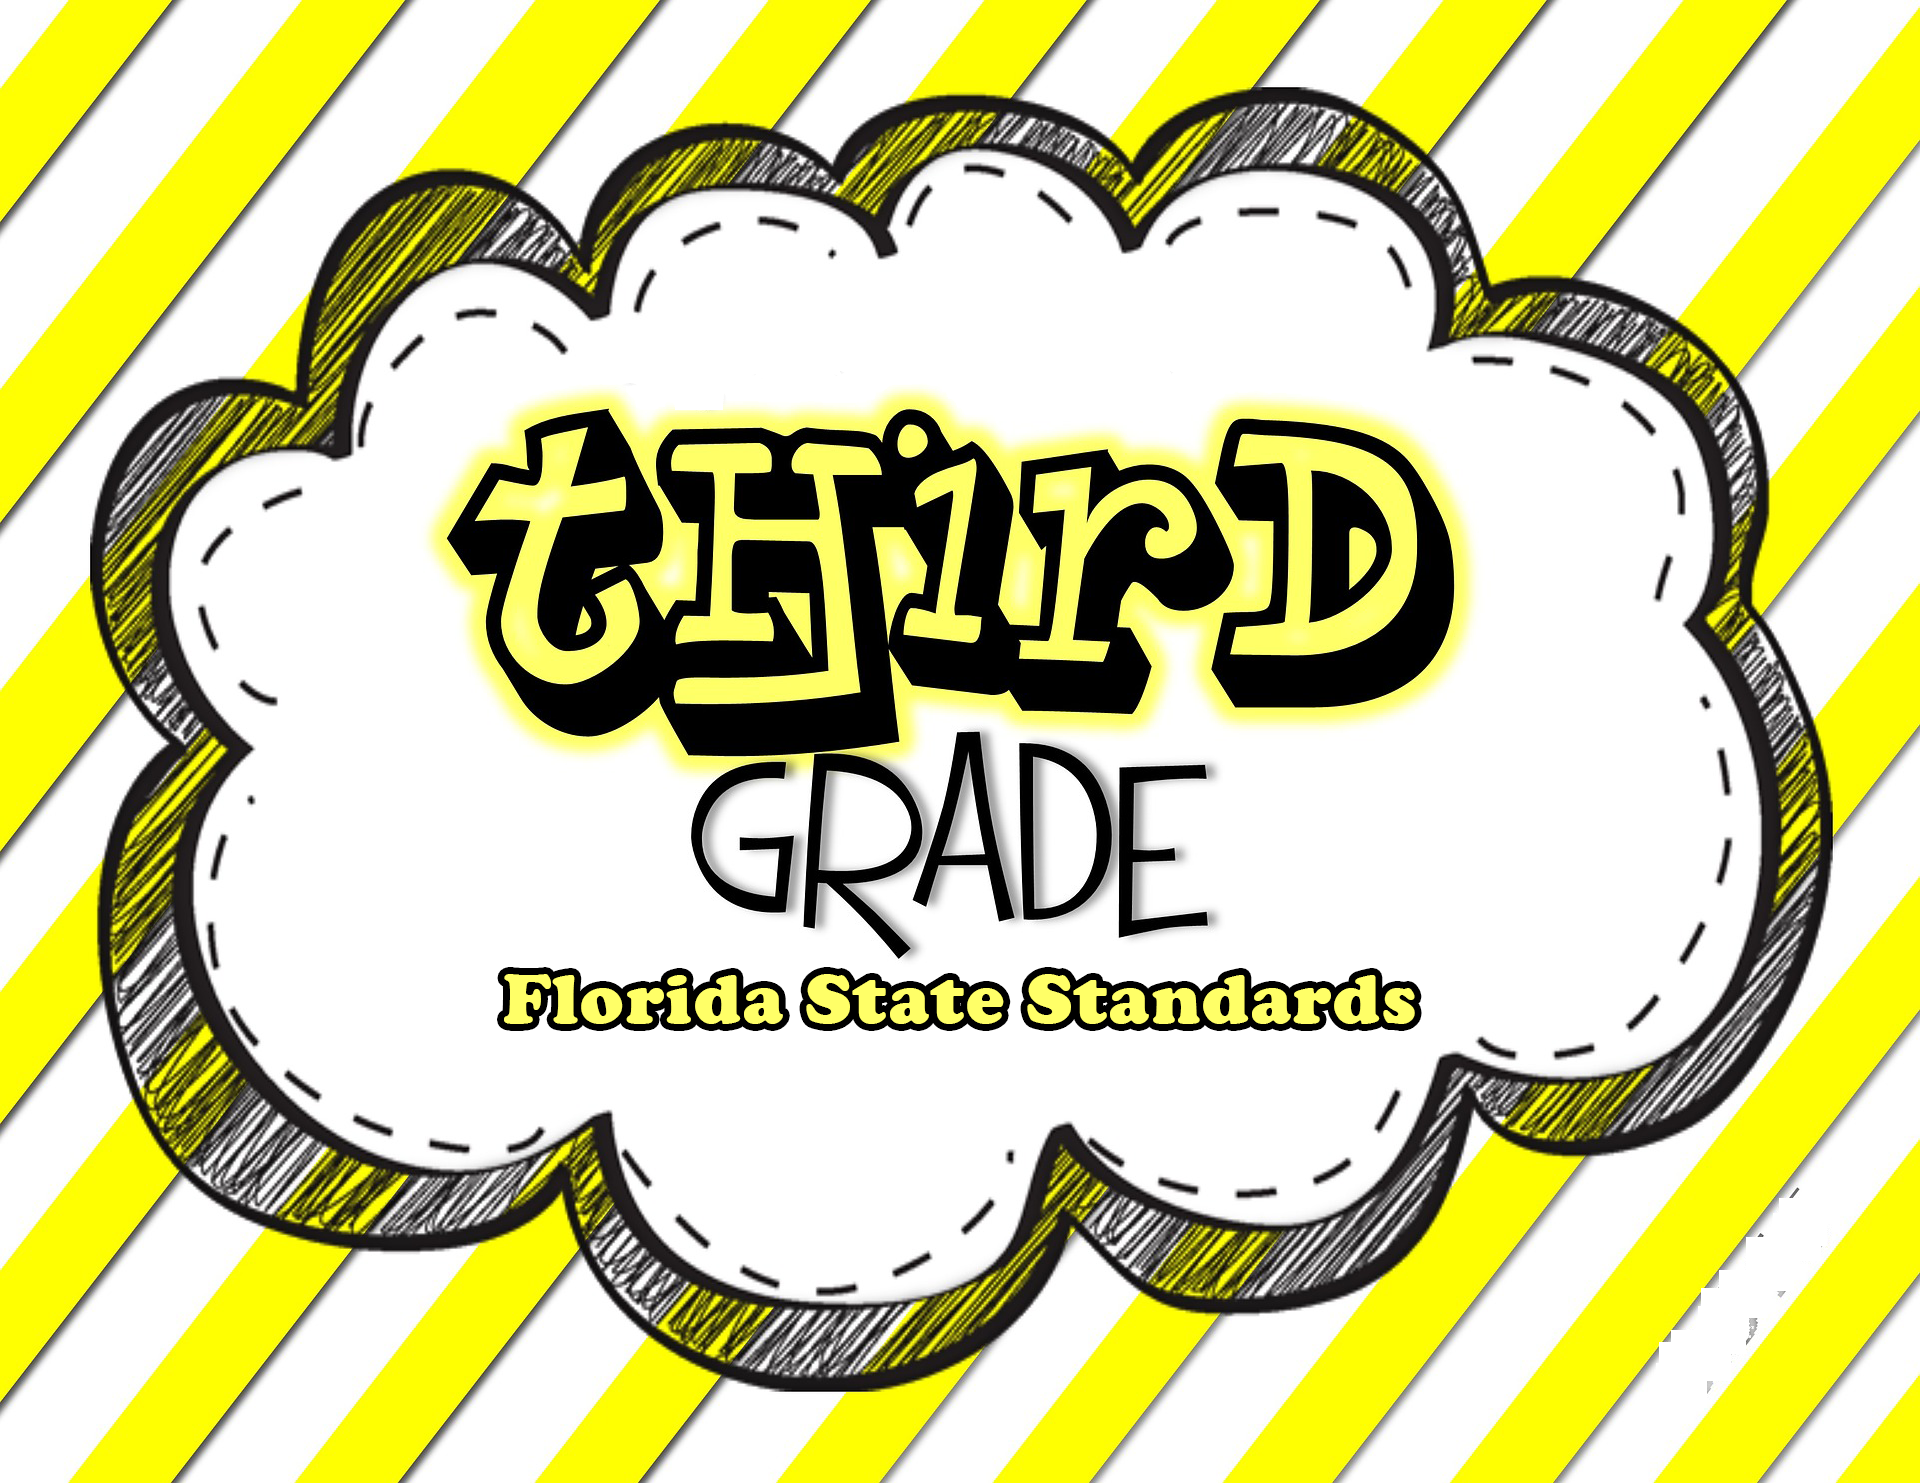 Third Grade Florida State Standards